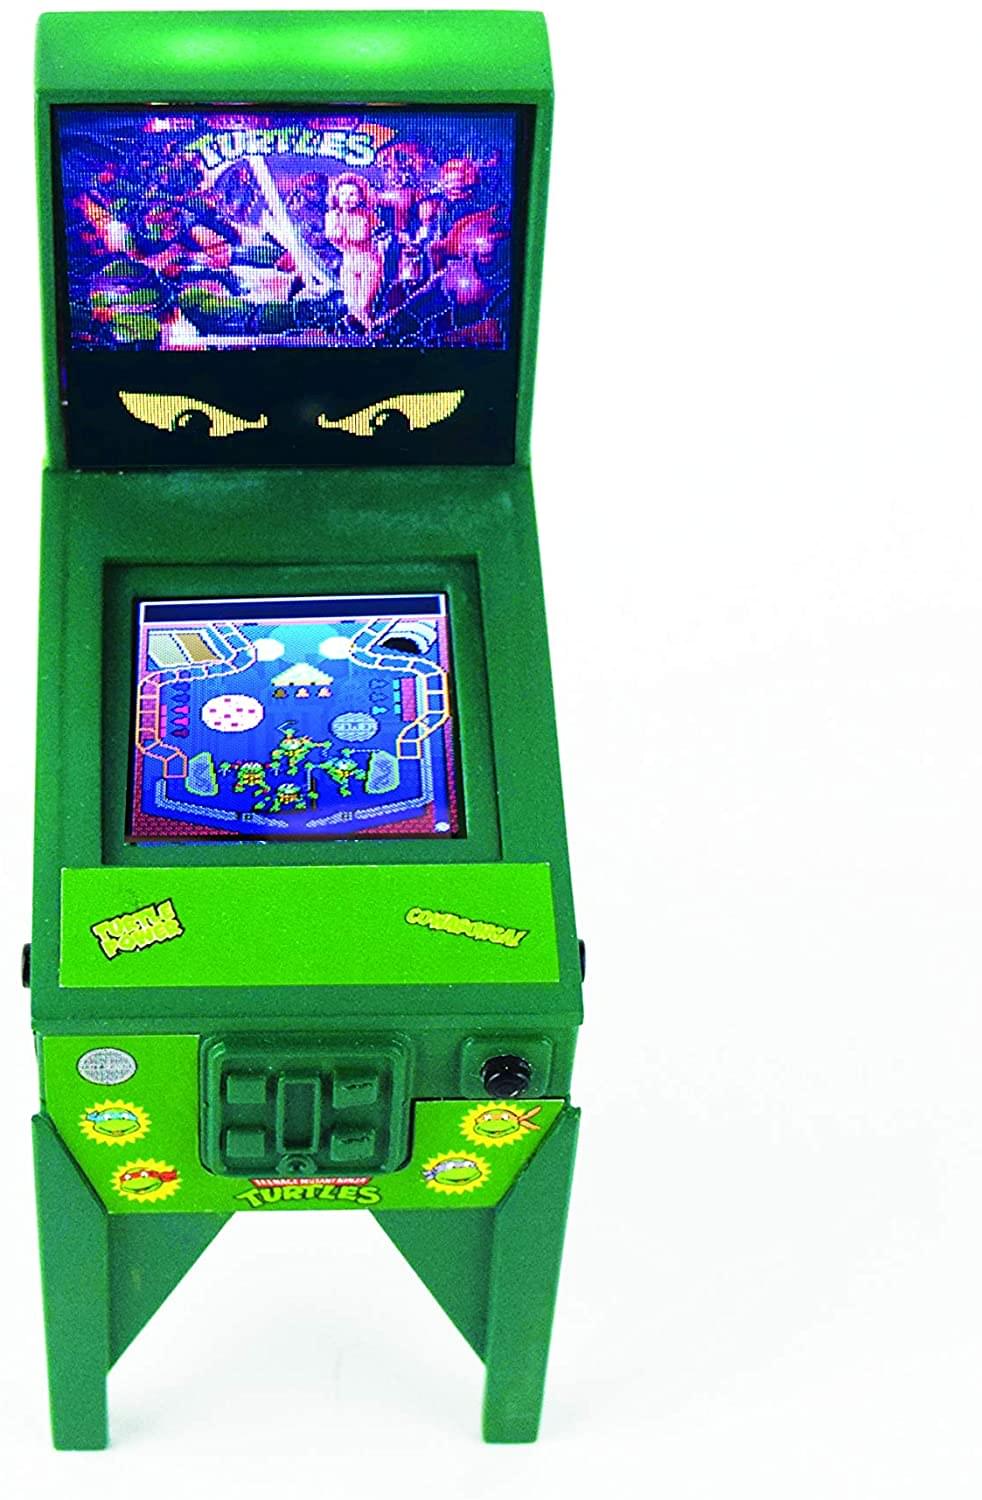 Boardwalk Arcade Miniature Electronic Game | TMNT Pinball